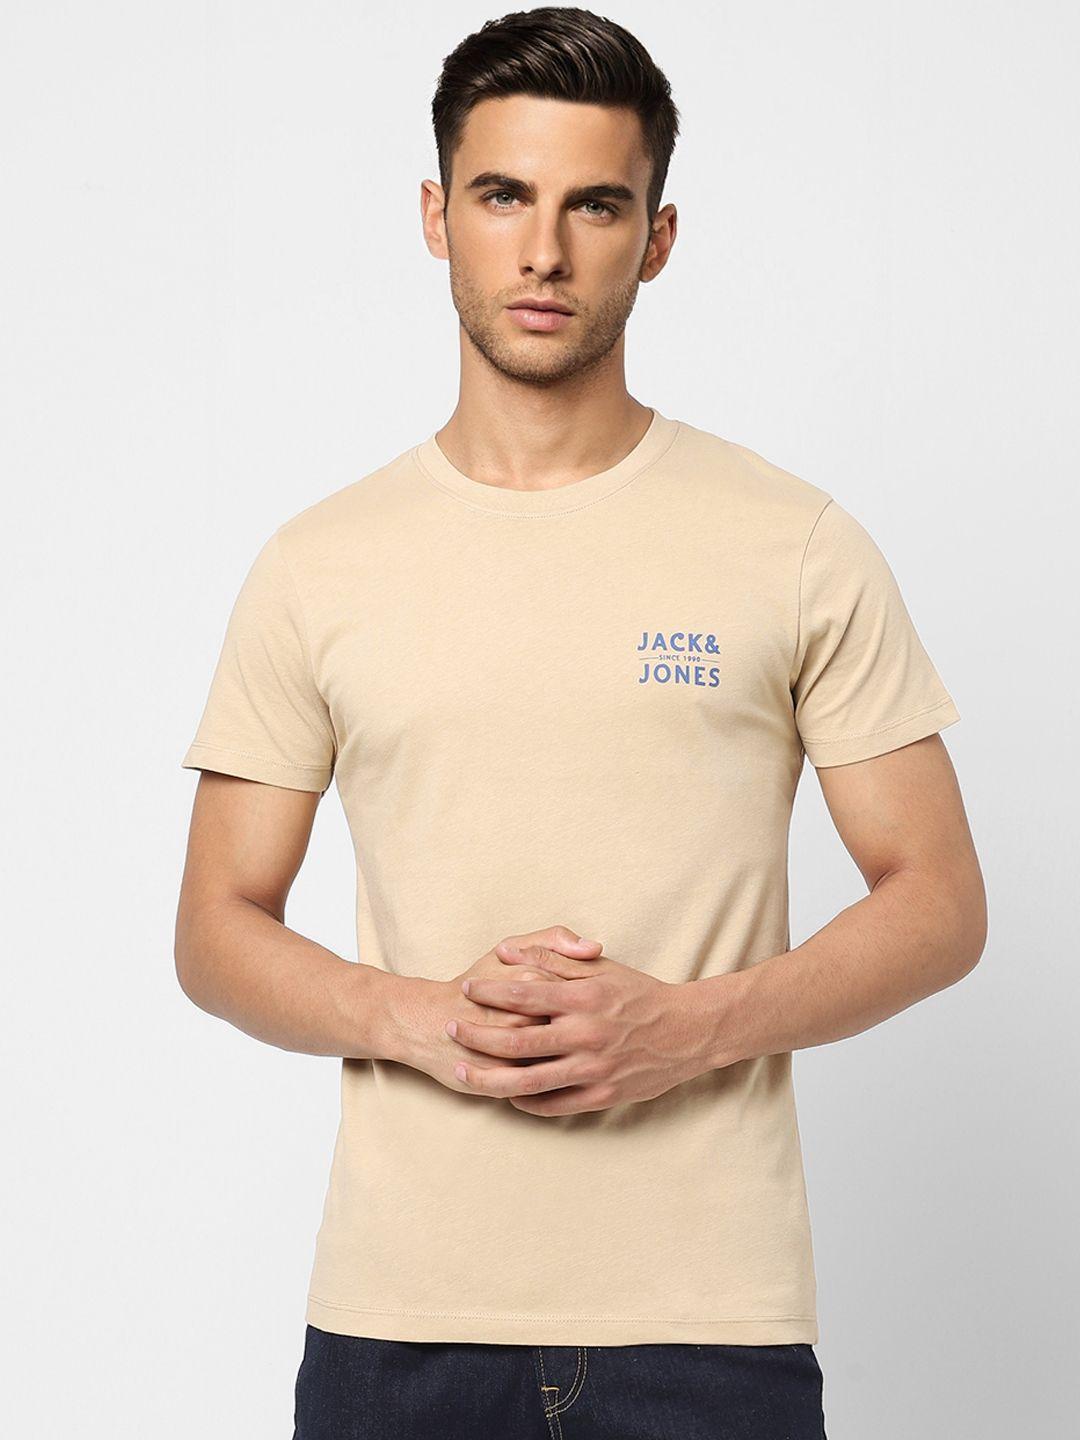 jack & jones men beige & blue brand logo printed pure cotton slim fit t-shirt